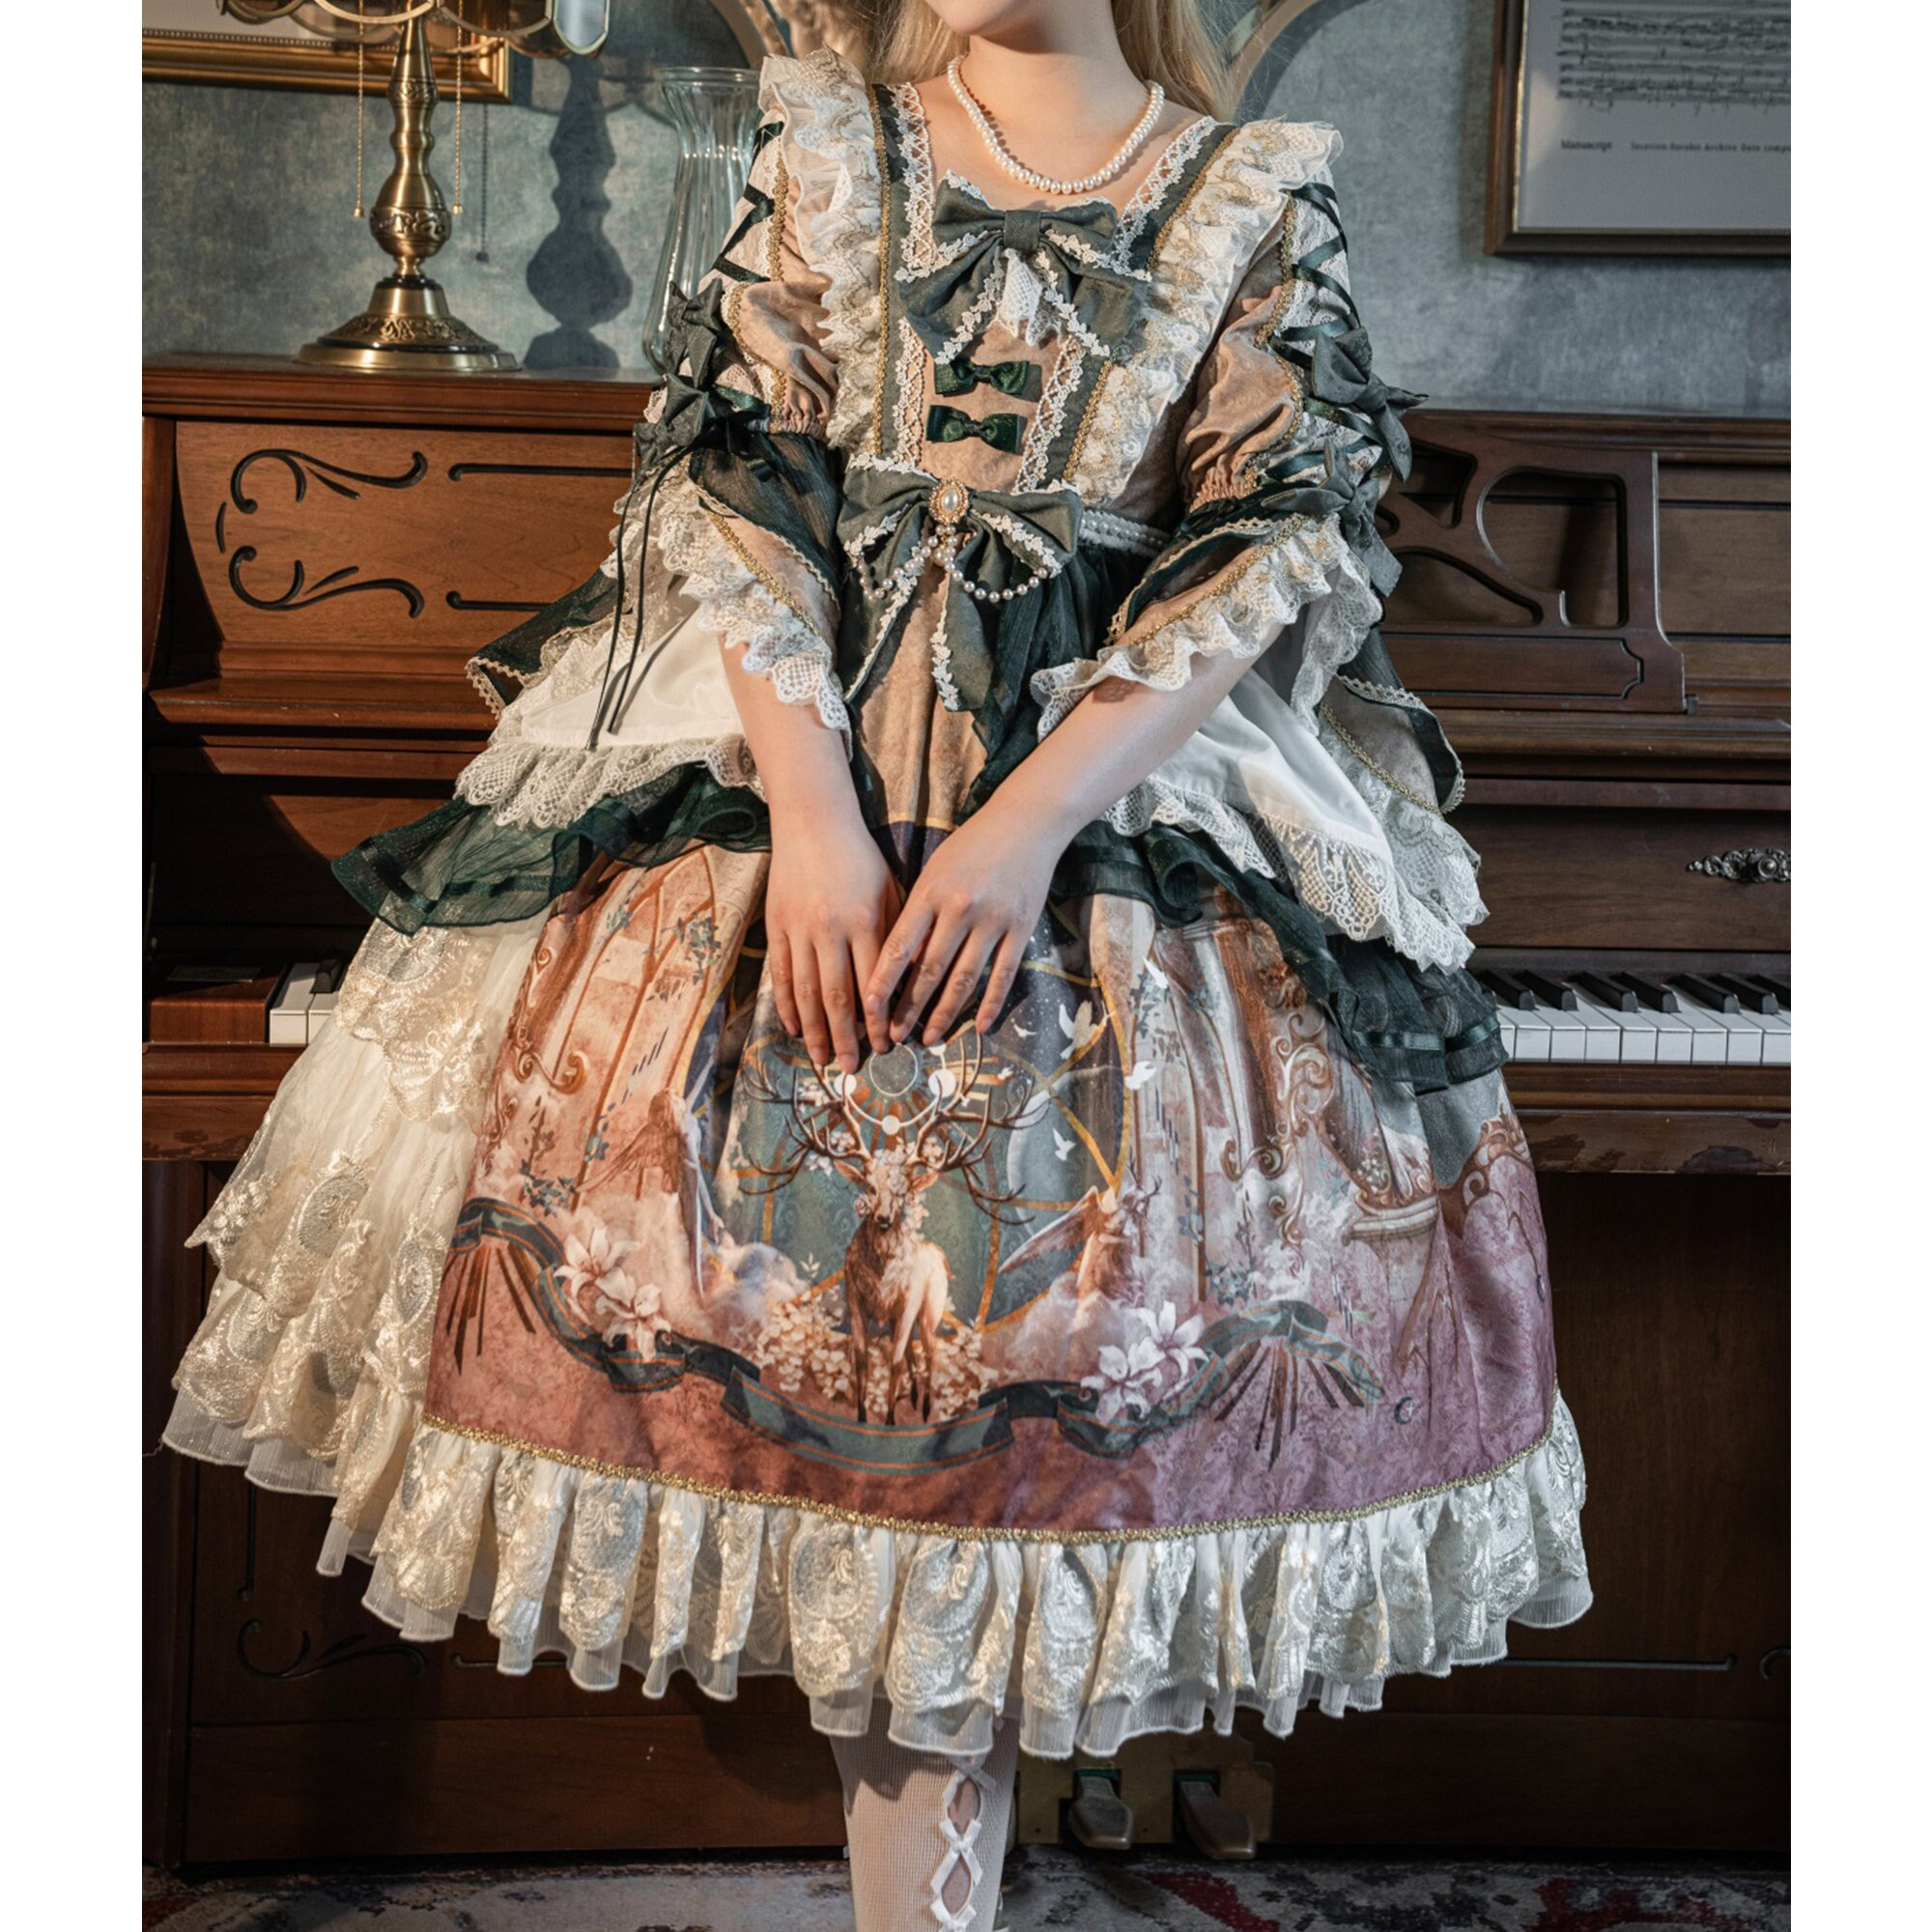 Green Lolita Dress - Cute and Kawaii Fashion for Princess Cosplay